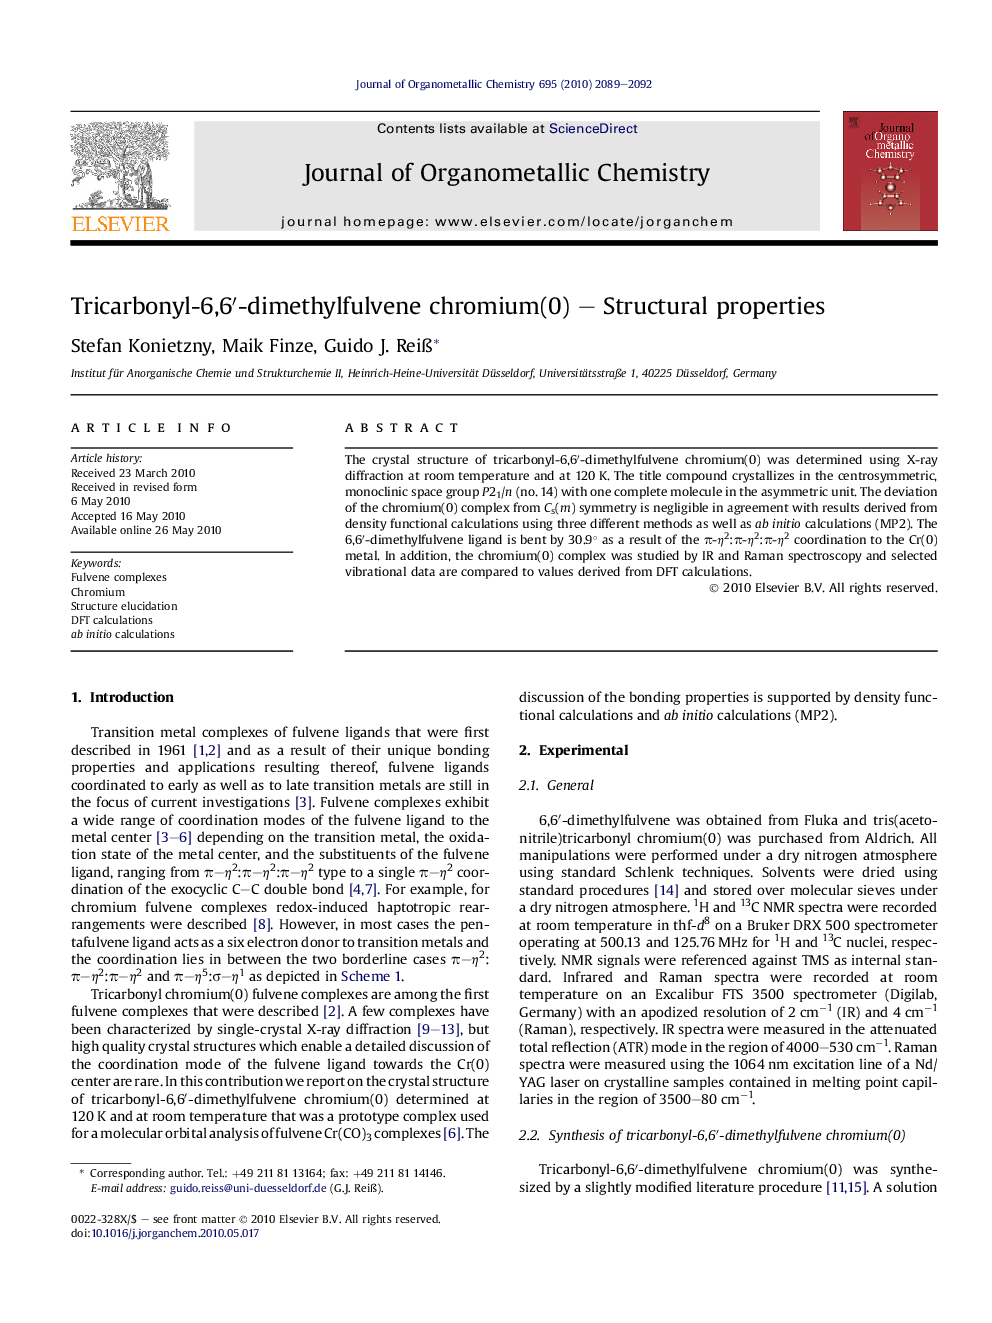 Tricarbonyl-6,6â²-dimethylfulvene chromium(0) - Structural properties